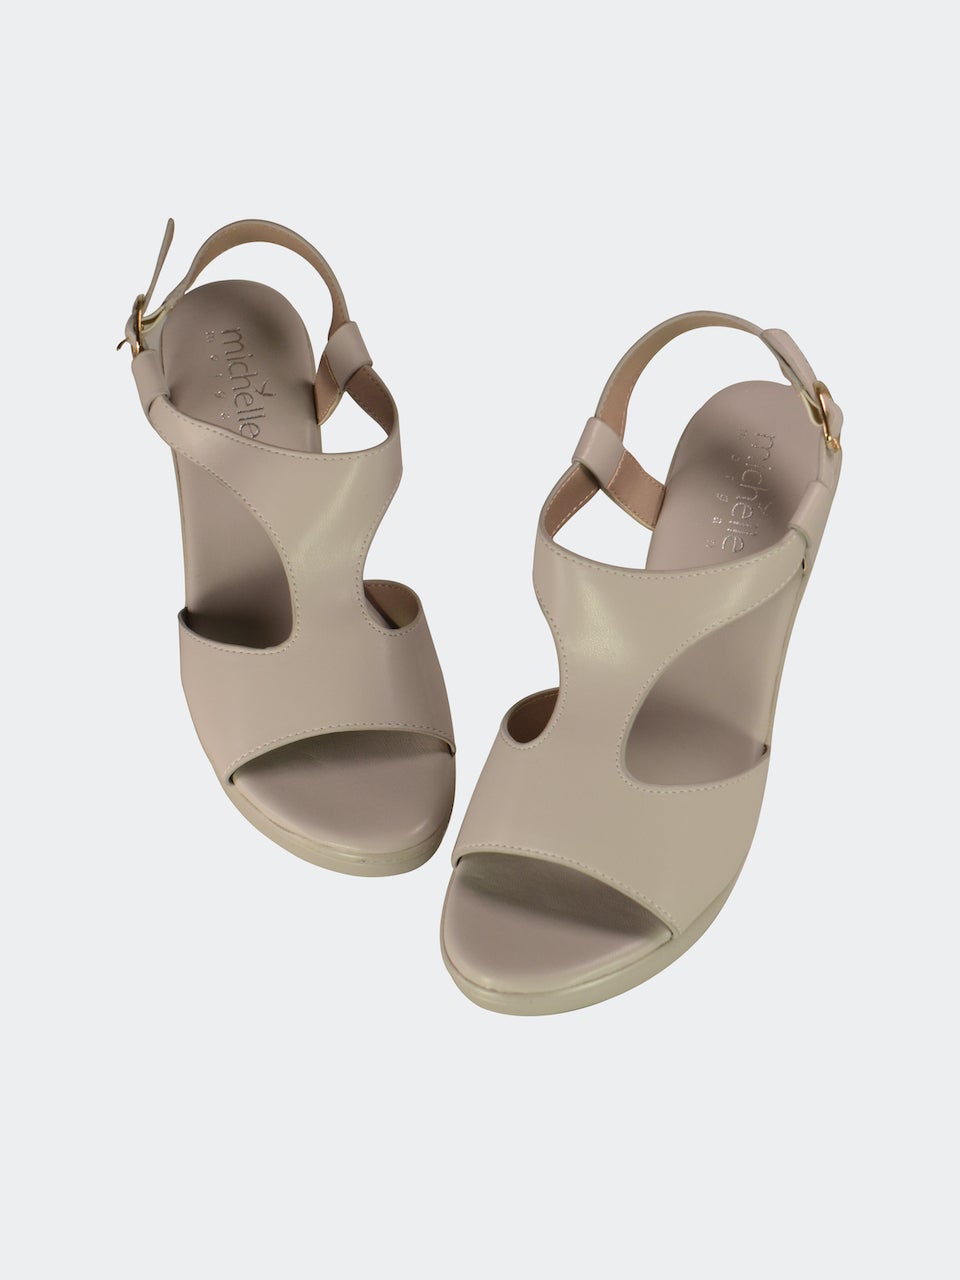 Michelle Morgan 914RJY72 Women's Heeled Sandals #color_Grey